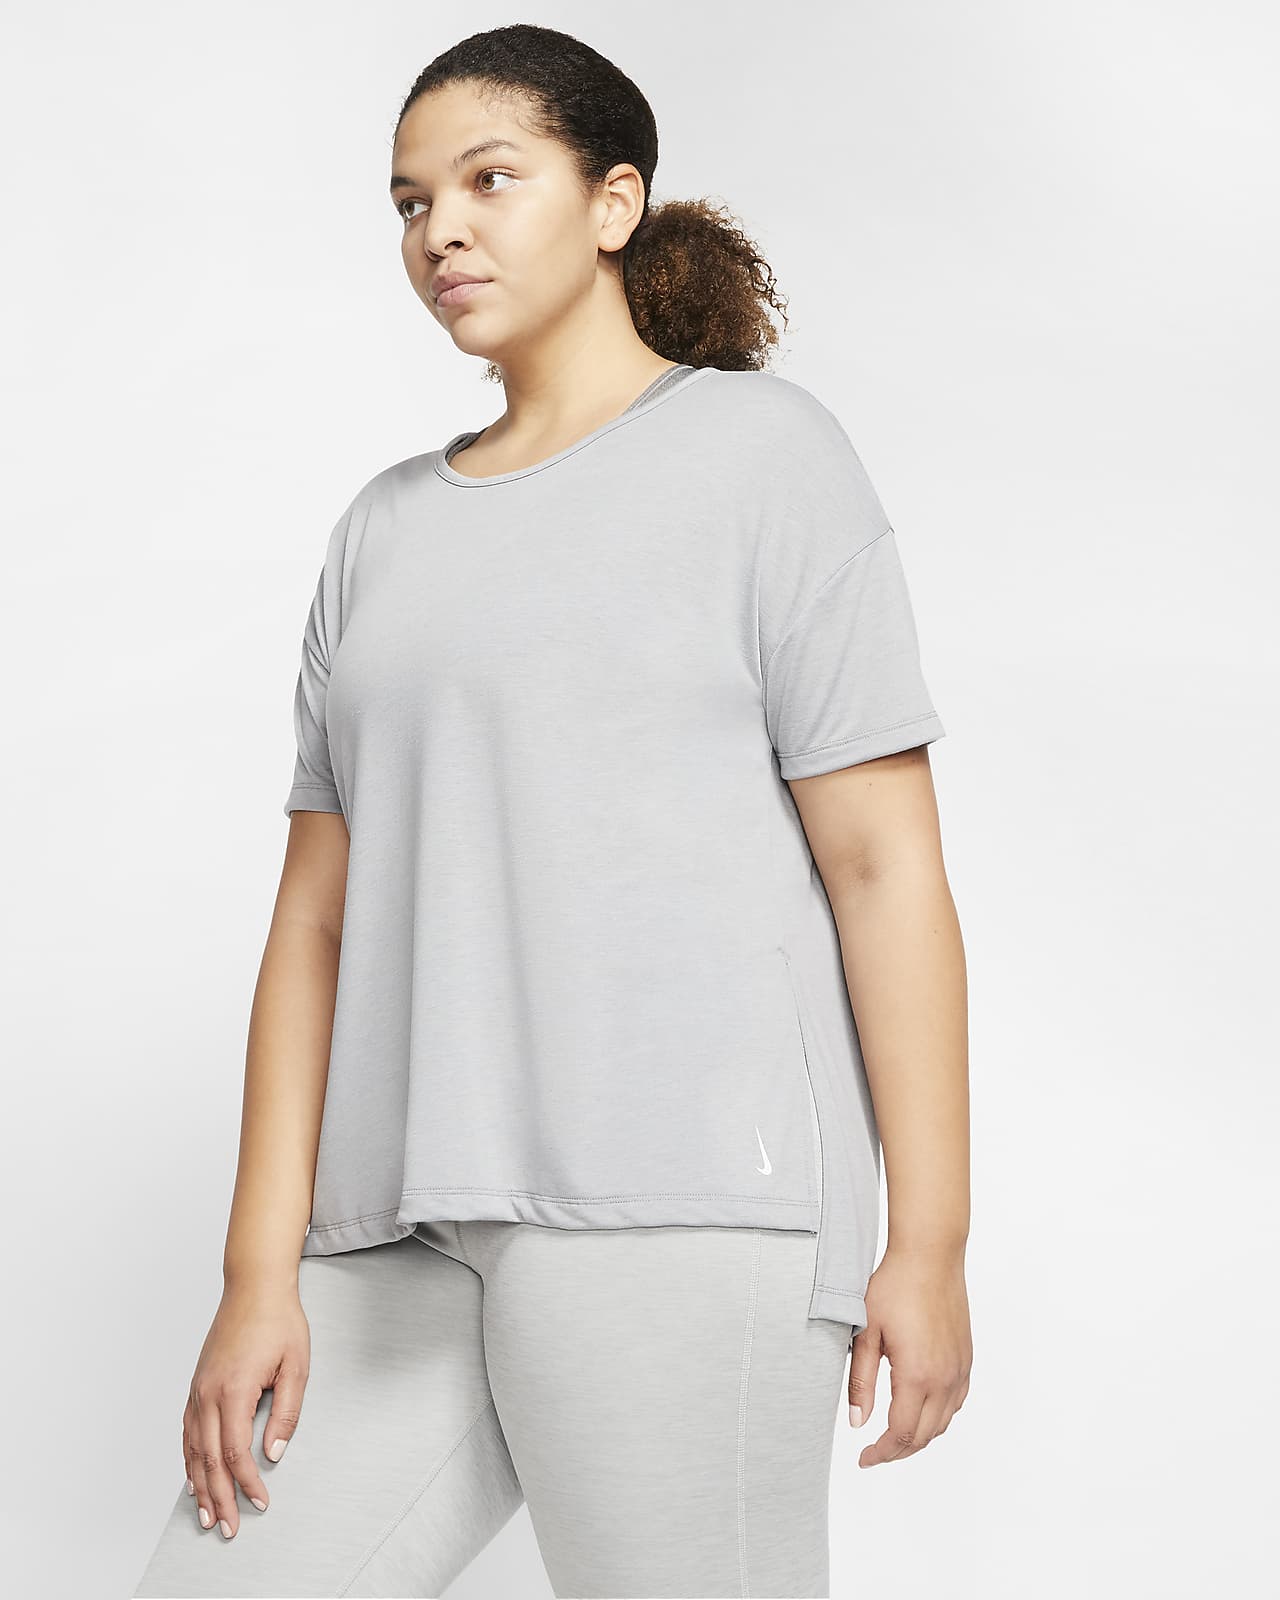 Yoga Women's Top Size). Nike.com